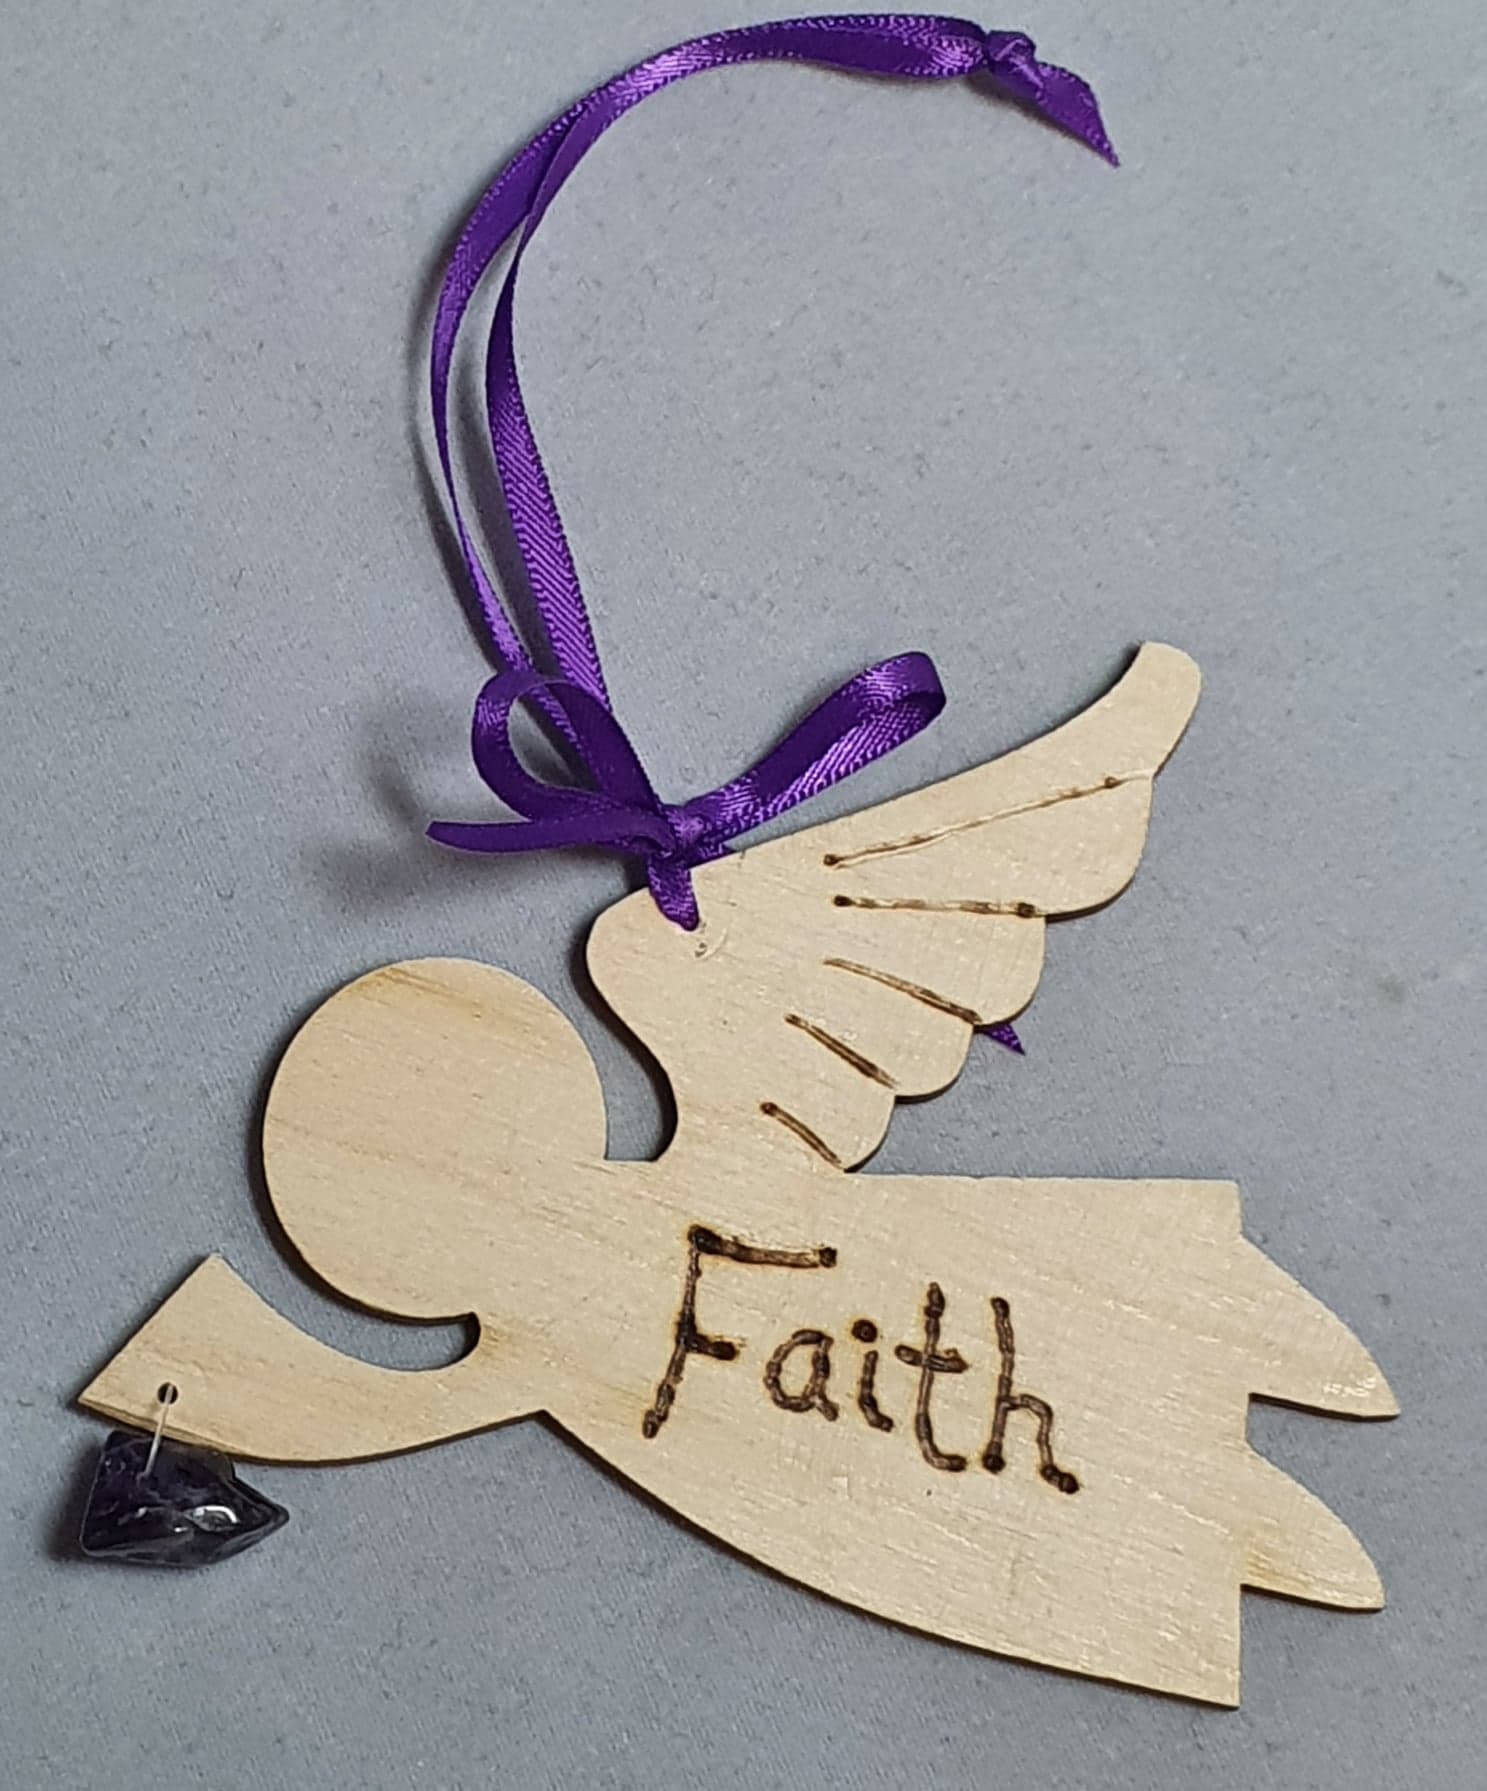 Rustic Charm Flying Angel with word "Faith" Amethyst